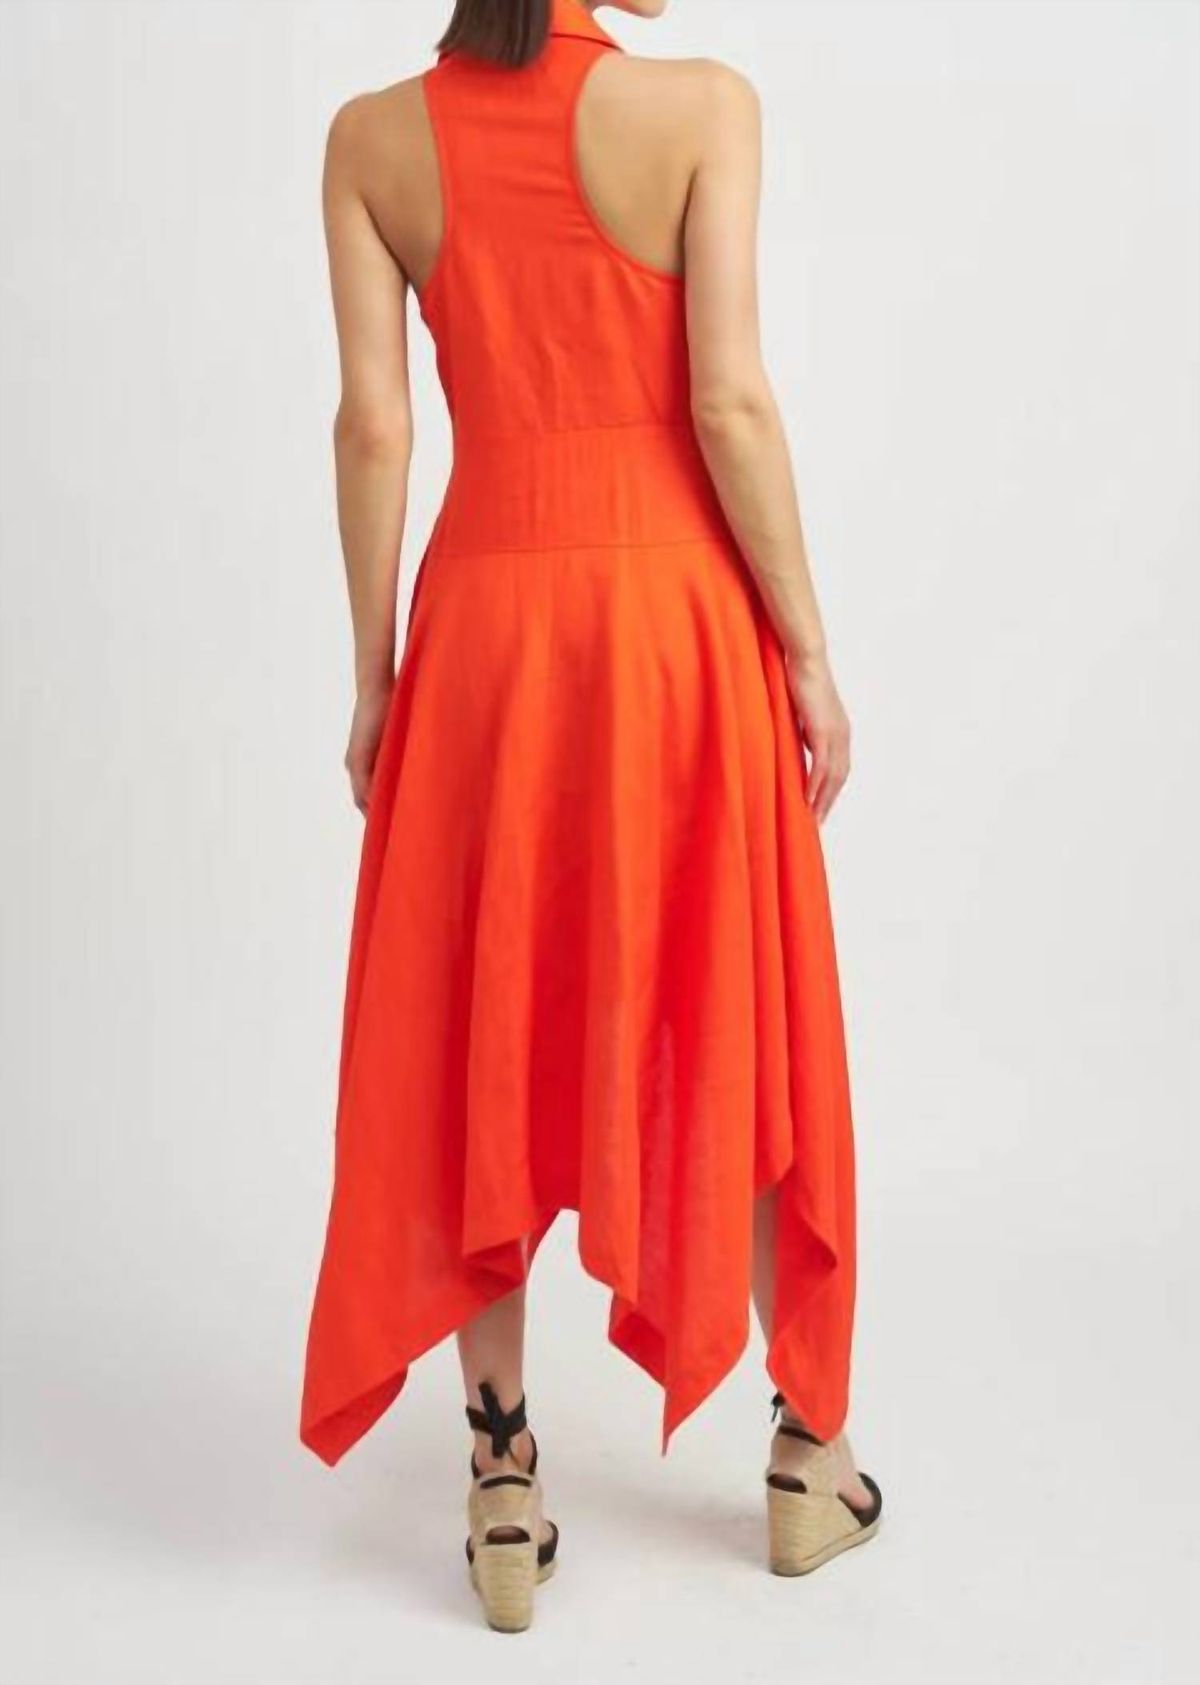 Style 1-1270903777-2901 En Saison Size M High Neck Orange Cocktail Dress on Queenly